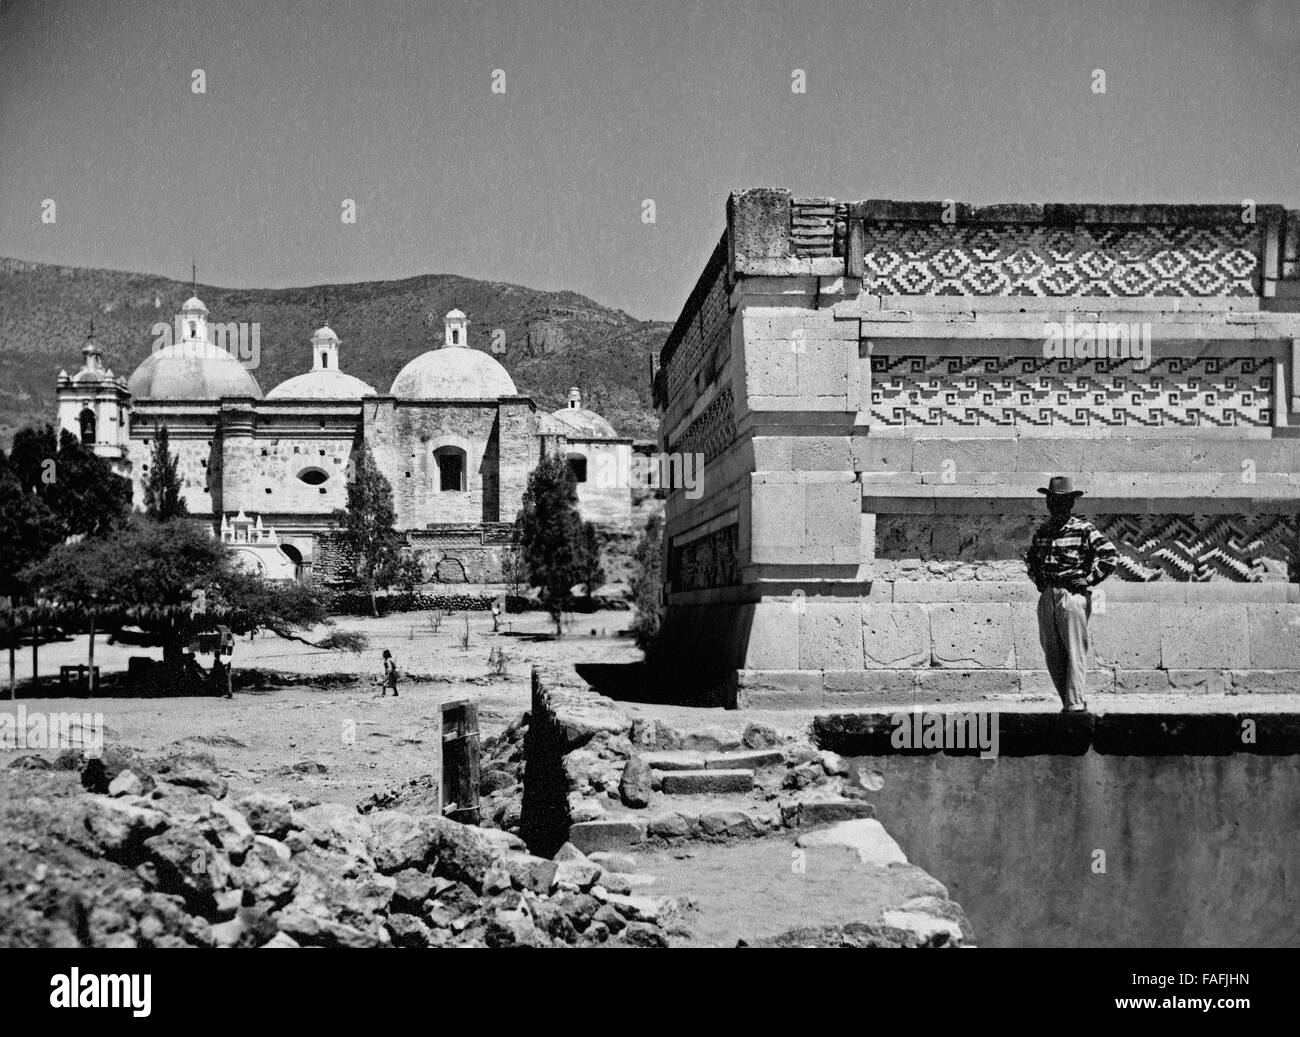 In den Ruinen von Mitla, Mexiko 1970erJahre. At the remains of Mitla, Mexico 1970s. Stock Photo